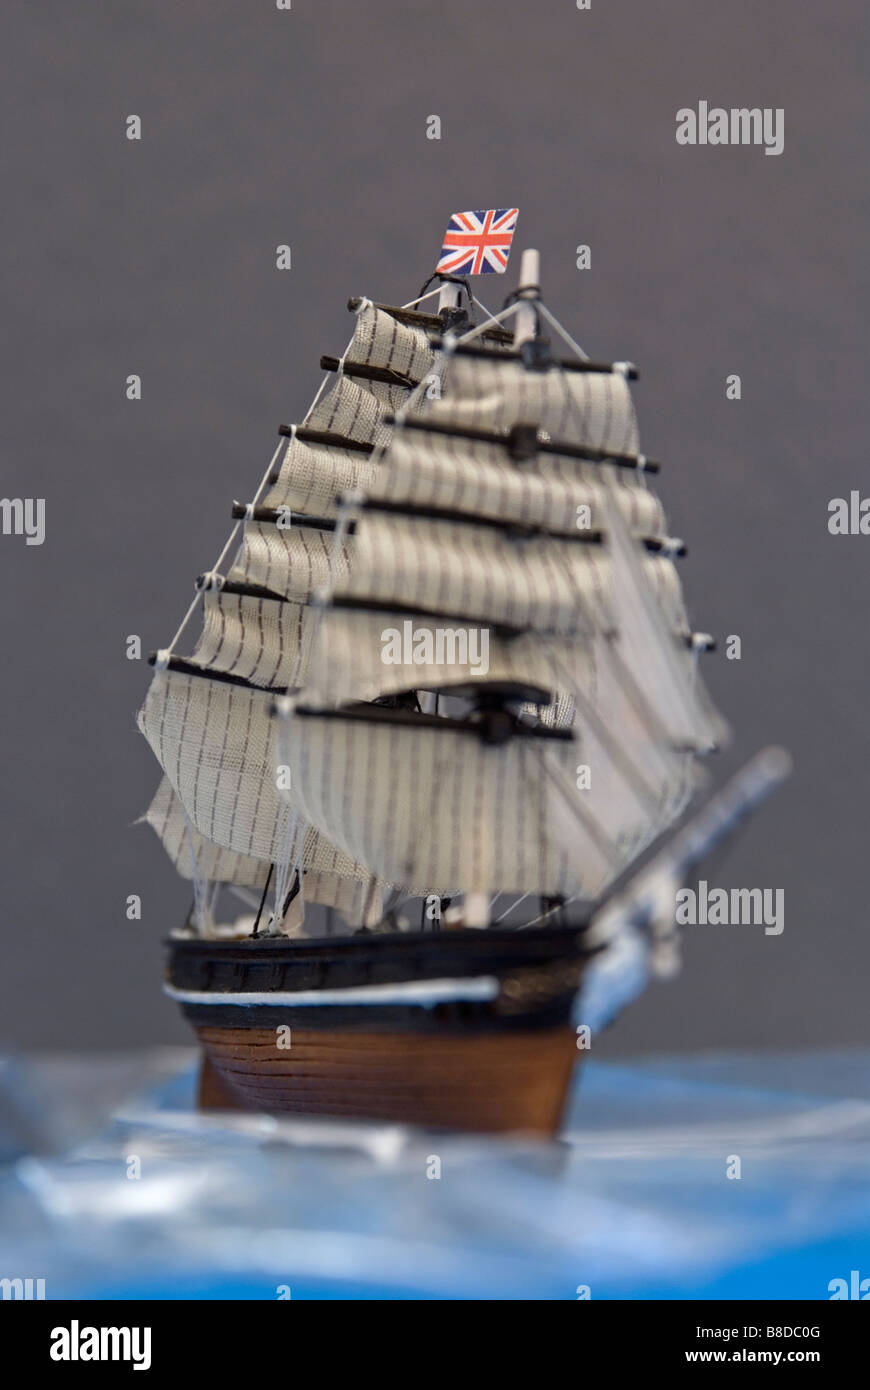 British vessel miniature model Stock Photo